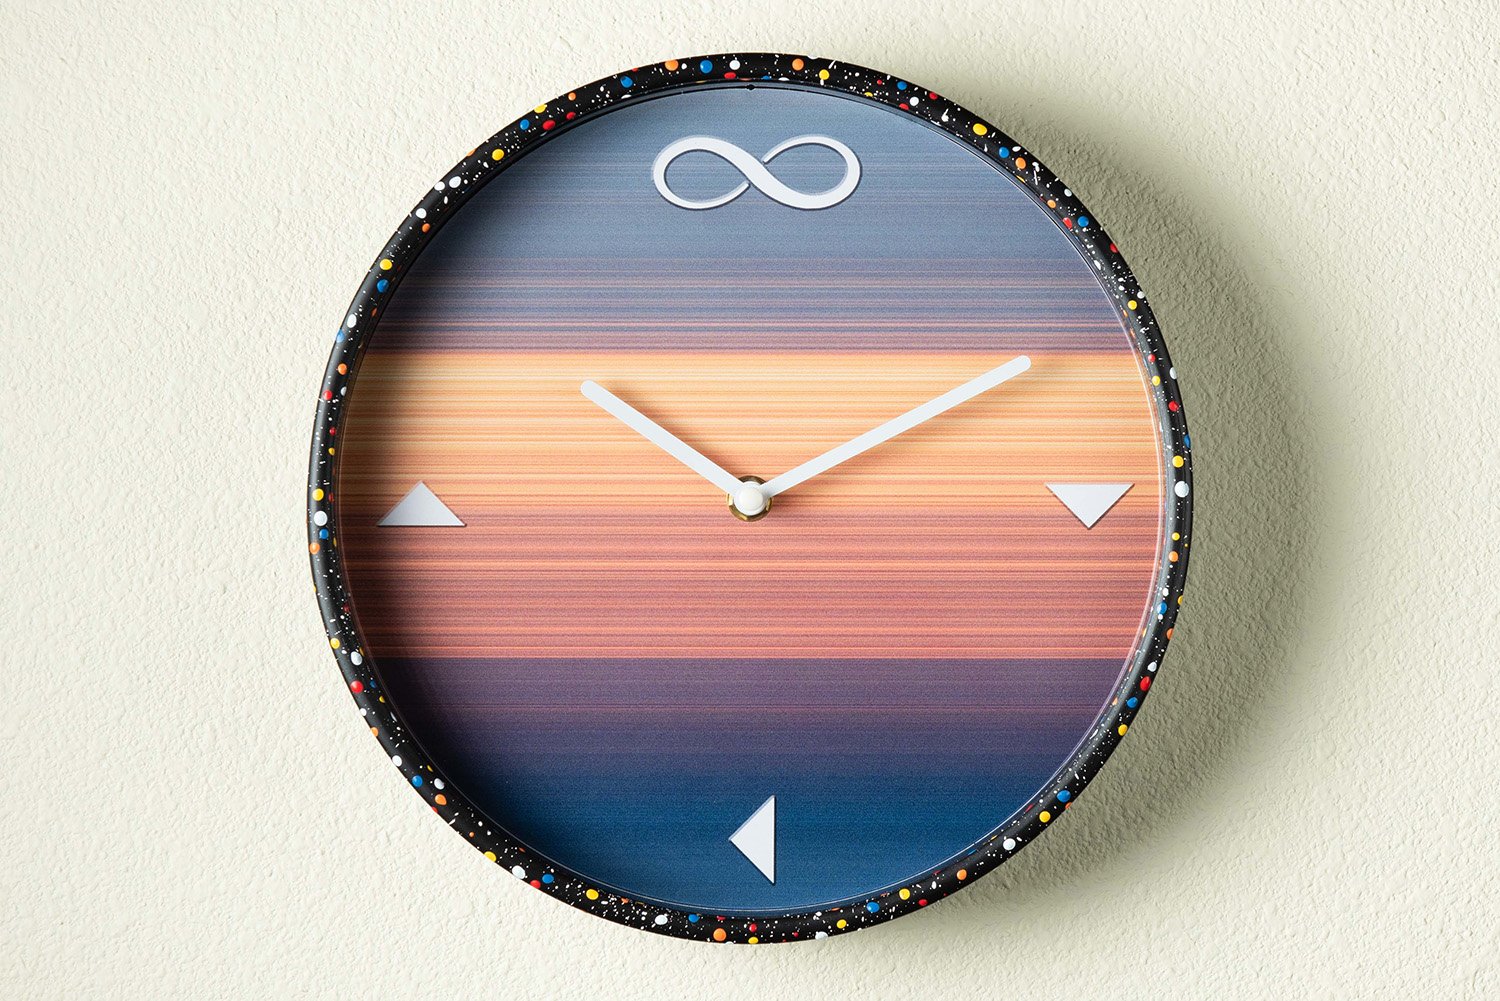 BAPSTRACT "Now Clocks"